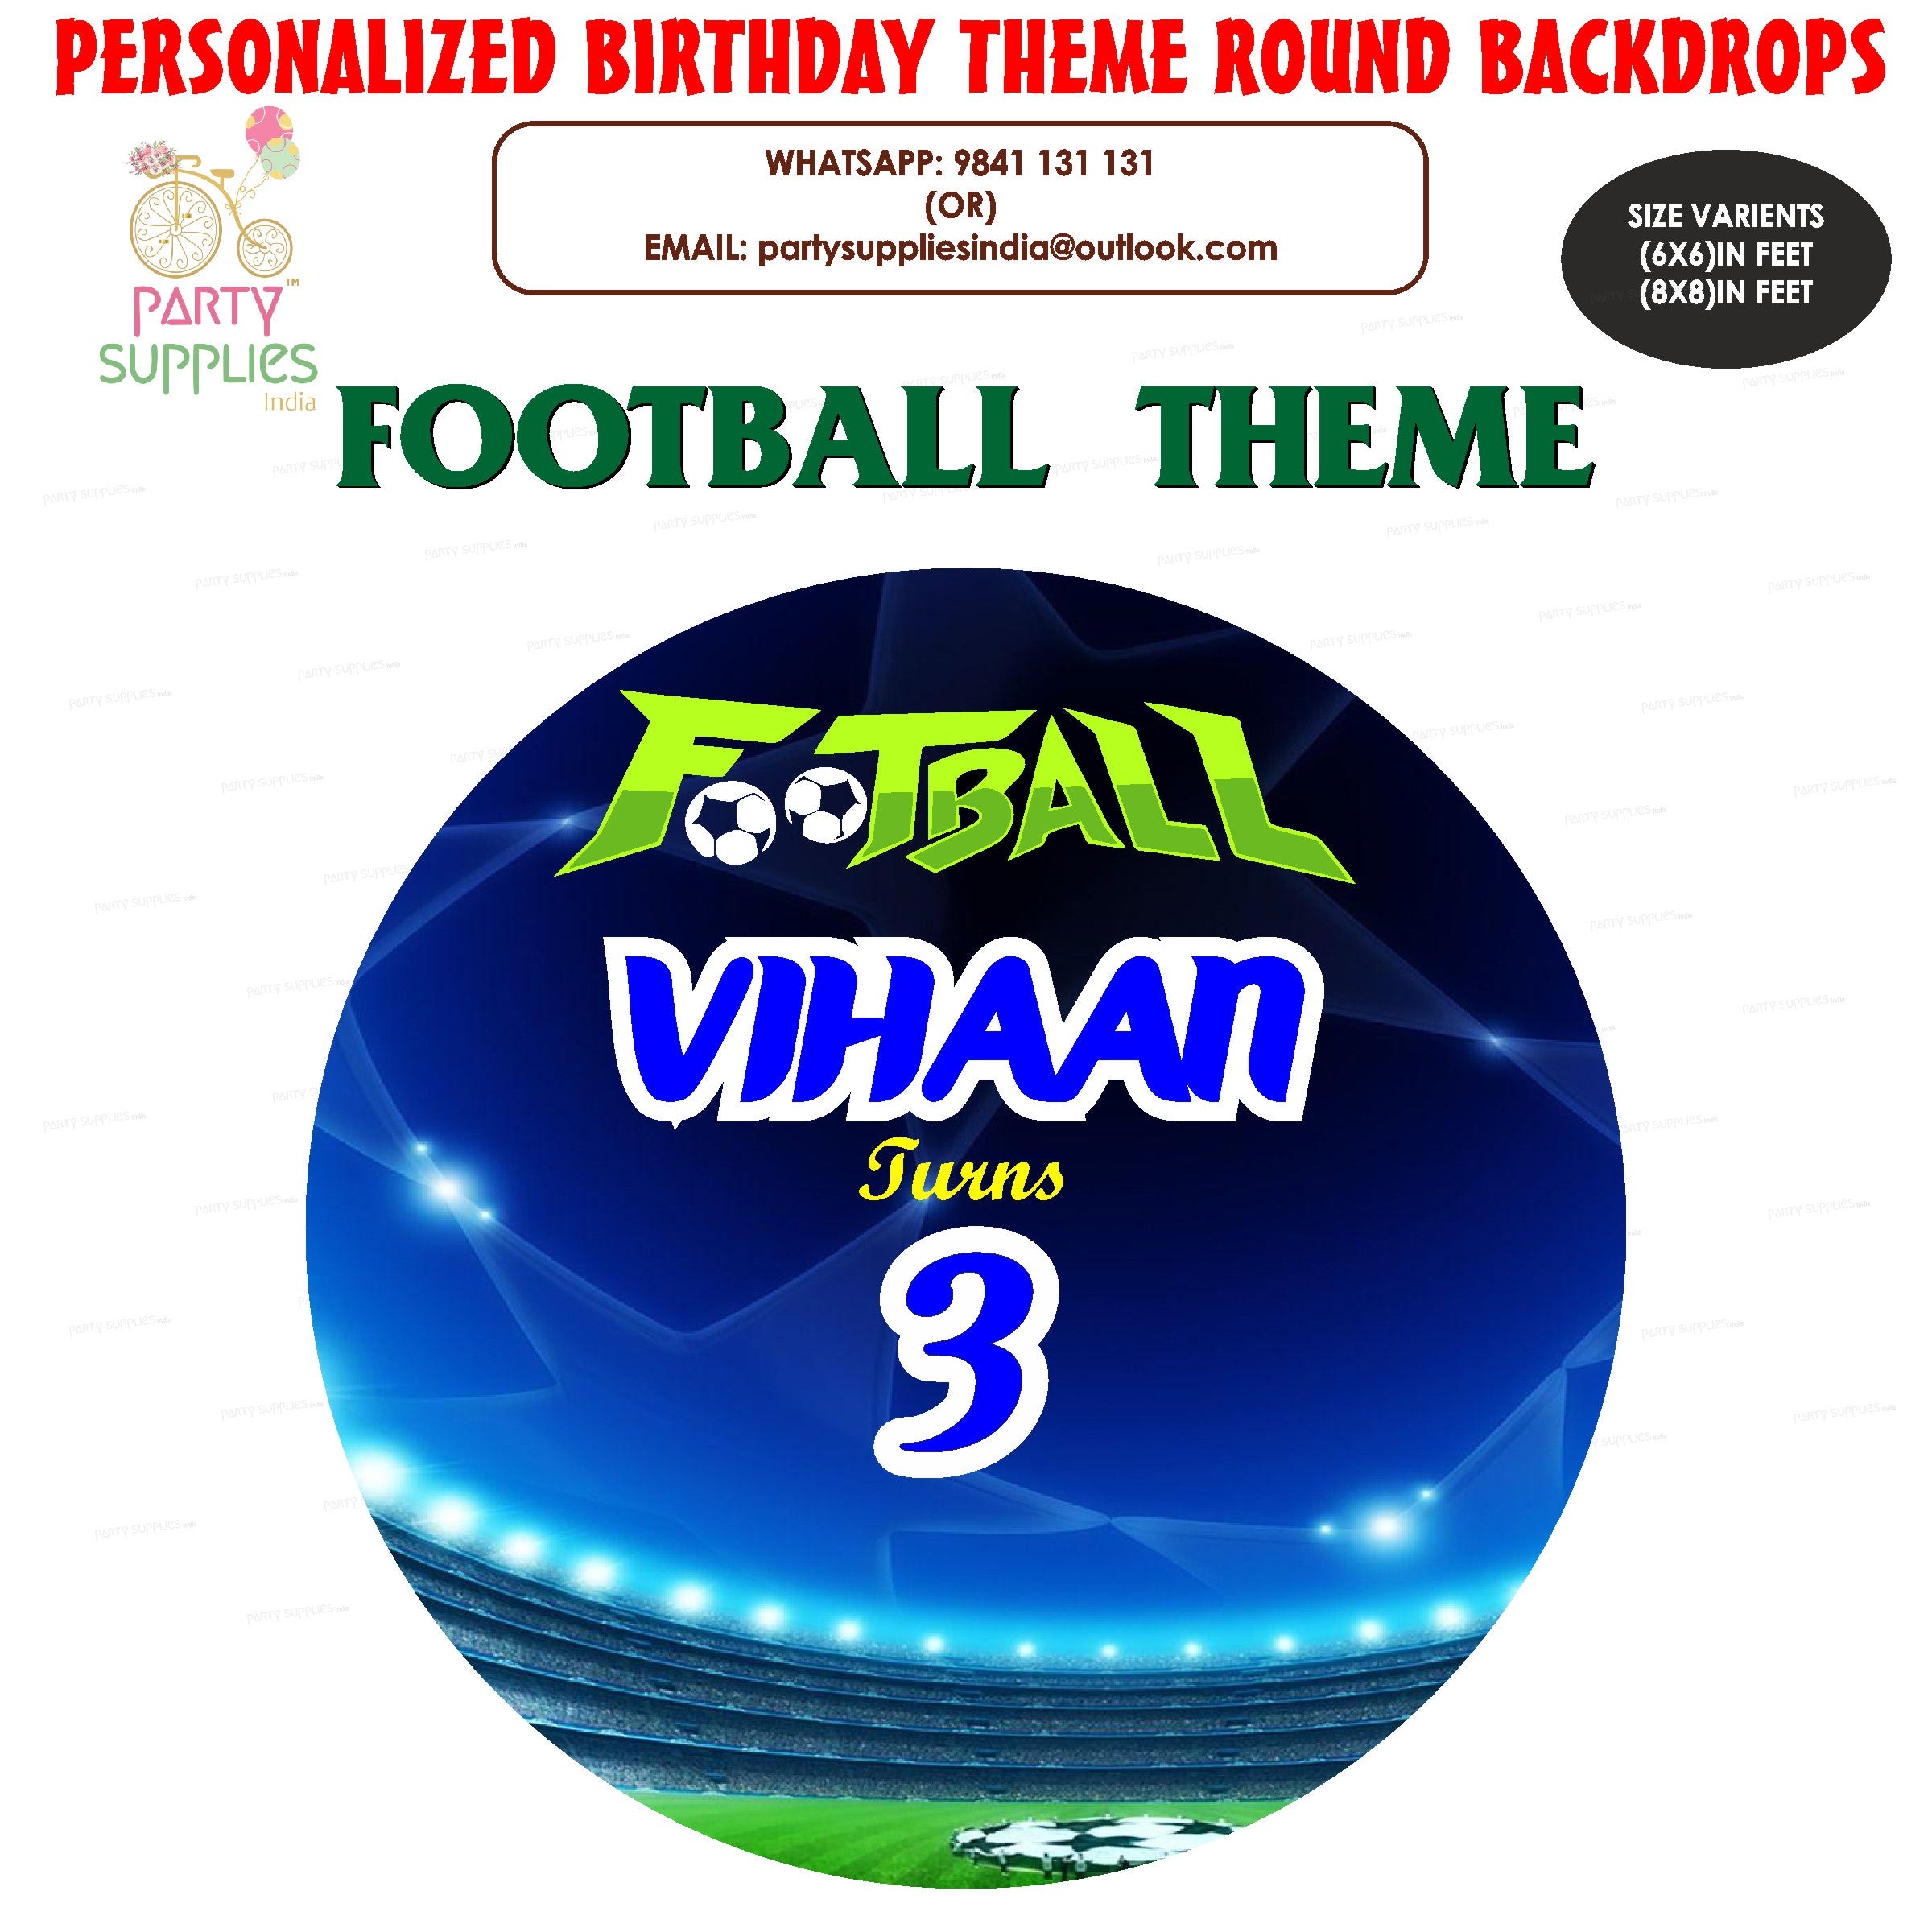 PSI Football Theme Personalized Round Backdrop